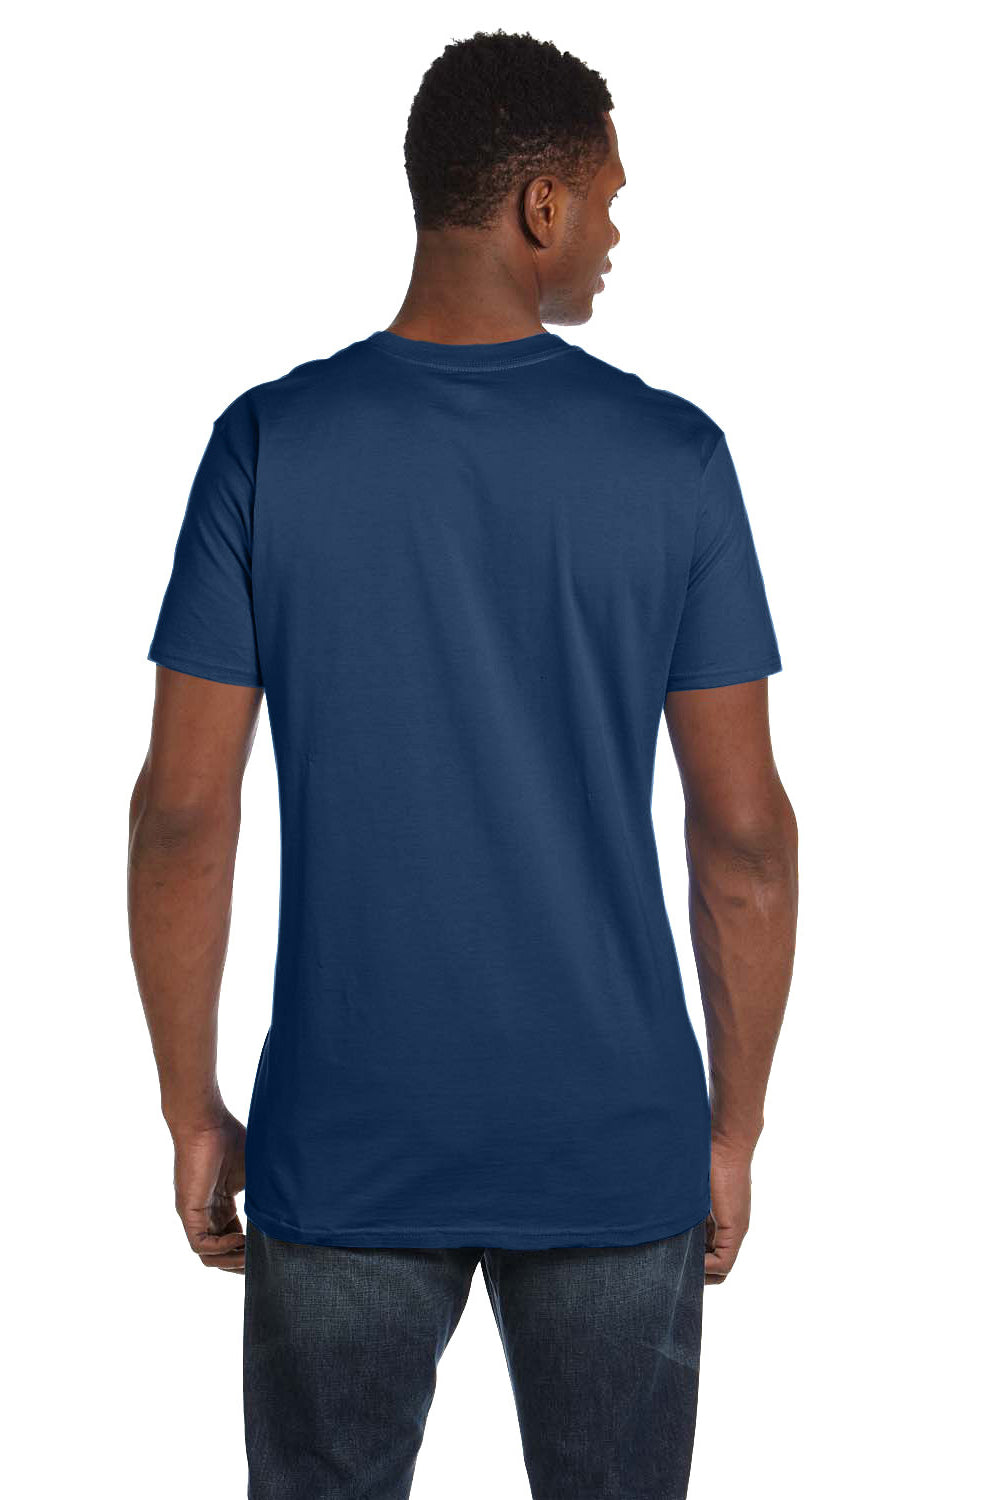 Hanes 4980 Mens Nano-T Short Sleeve Crewneck T-Shirt Heather Navy Blue Back